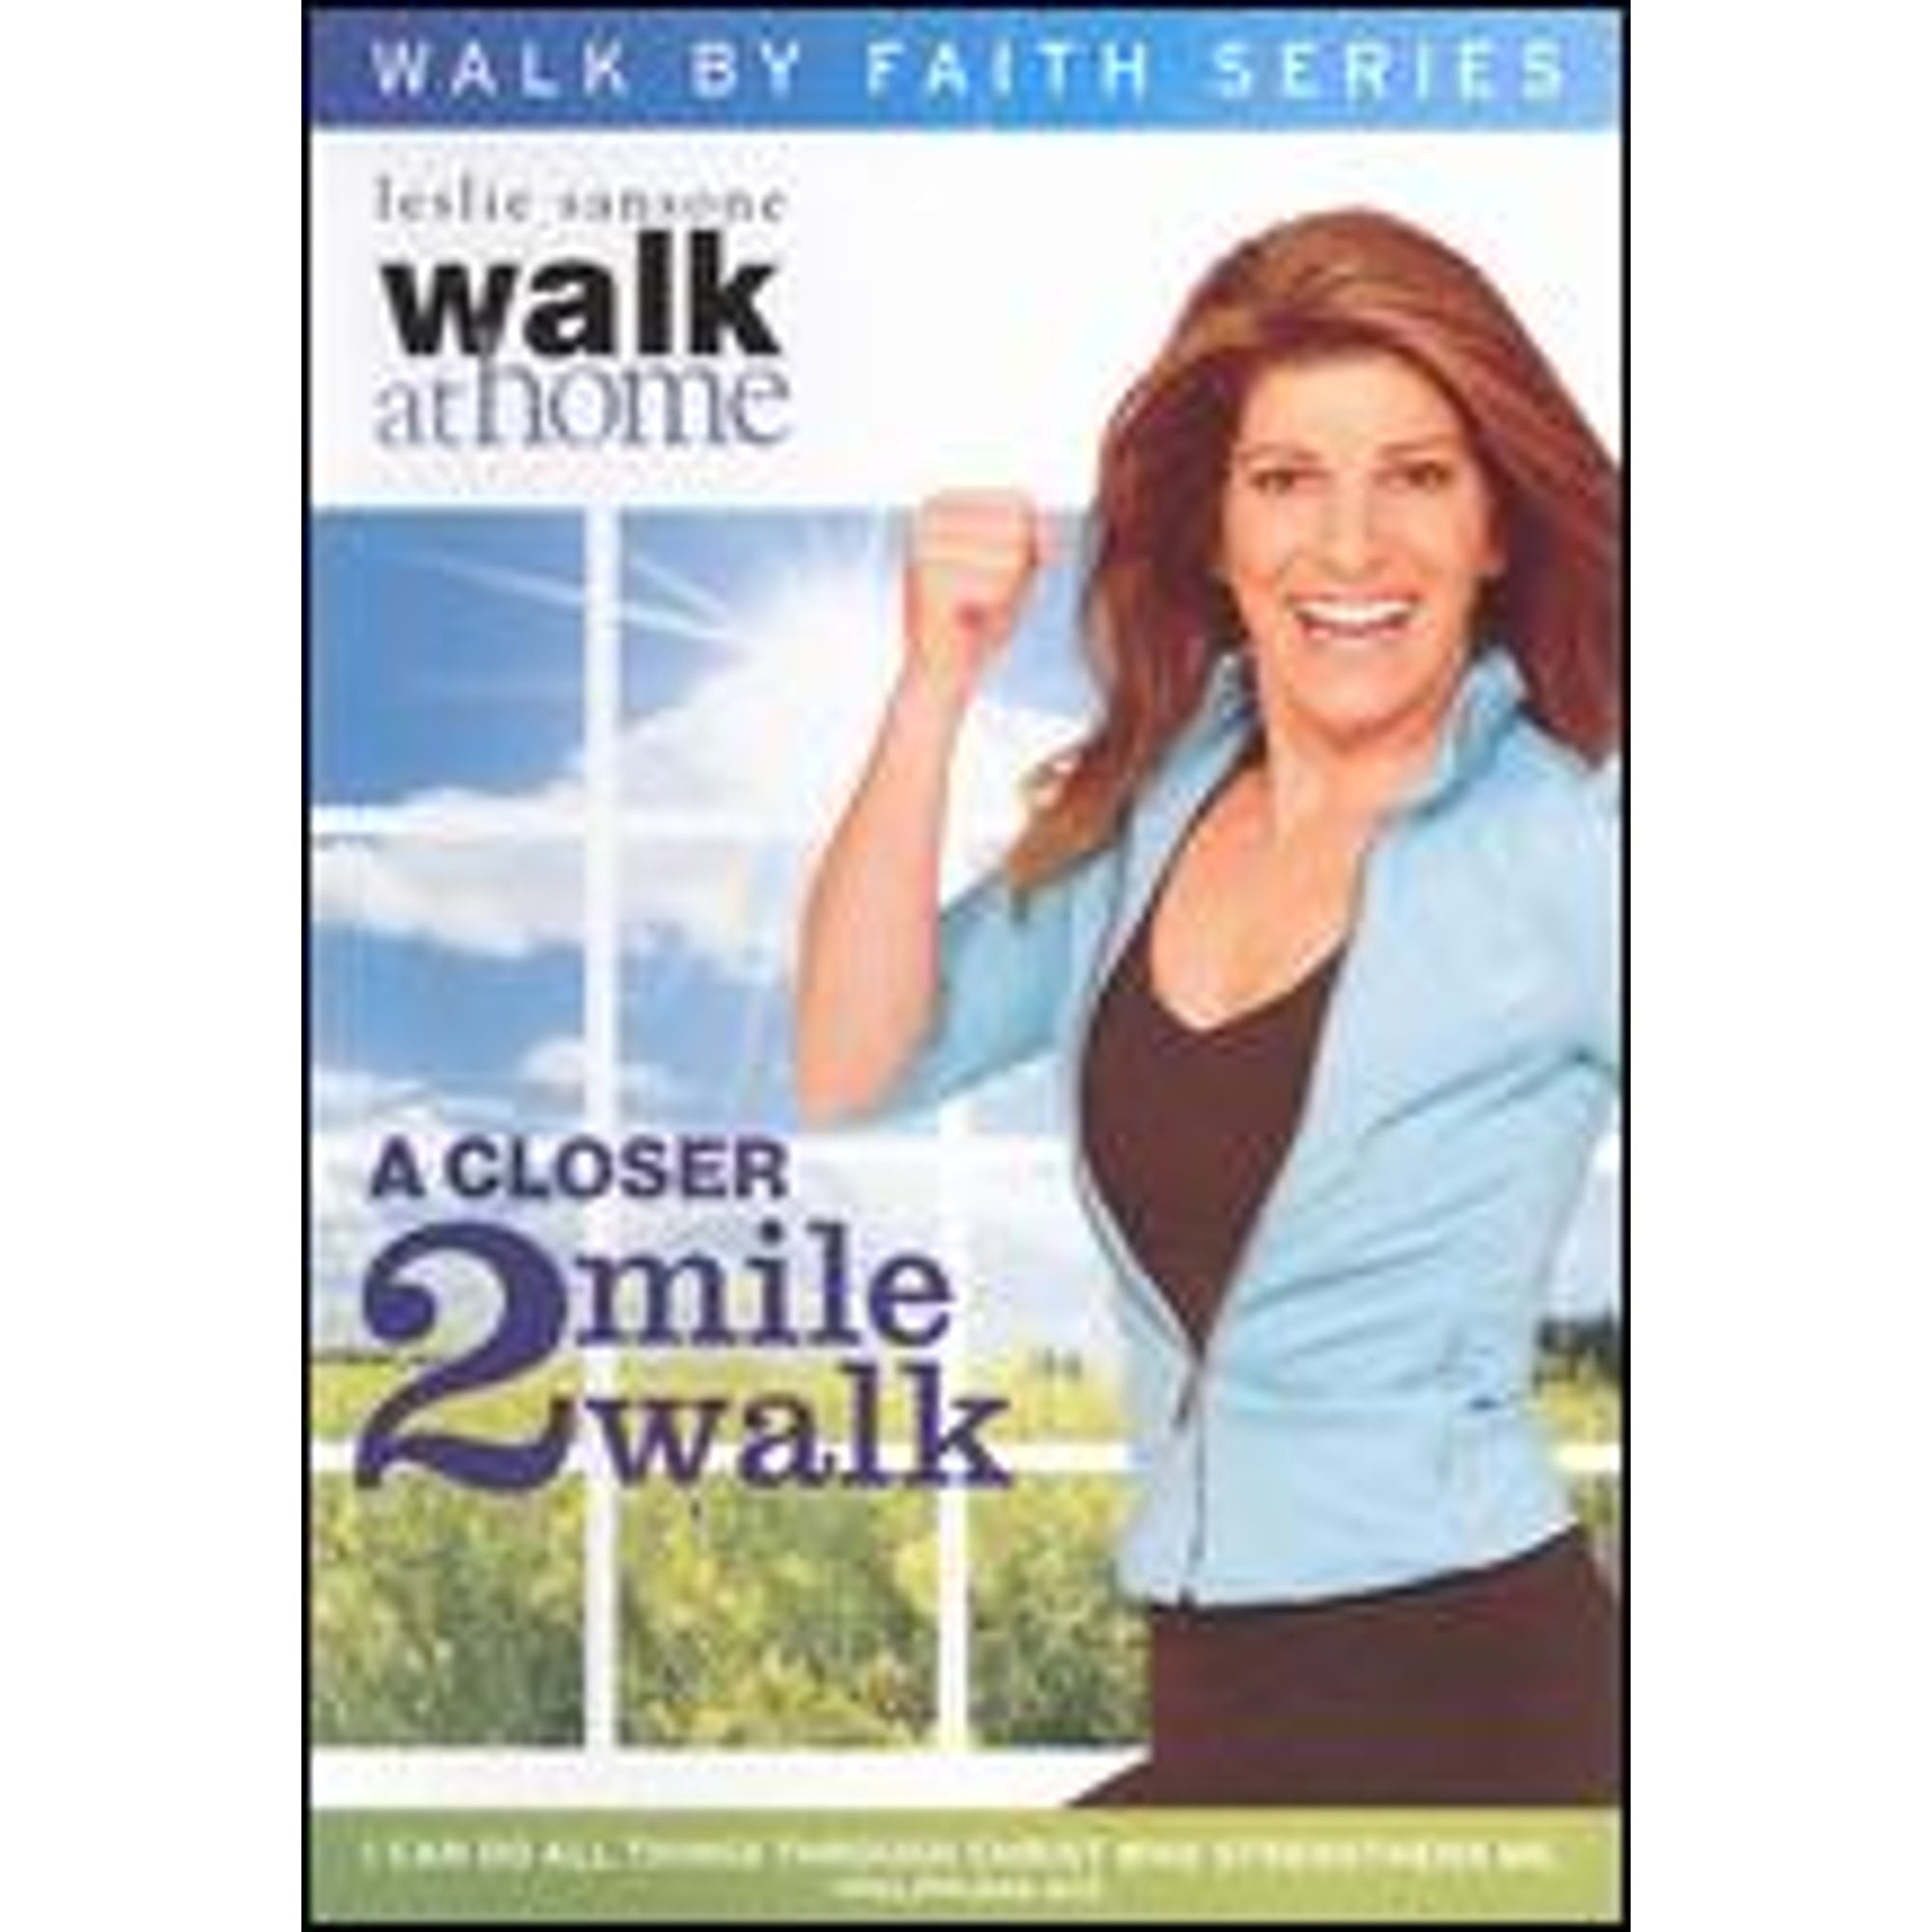 Pre-Owned Leslie Sansone: Walk at Home - A Closer 2 Mile (DVD 0013131555691)